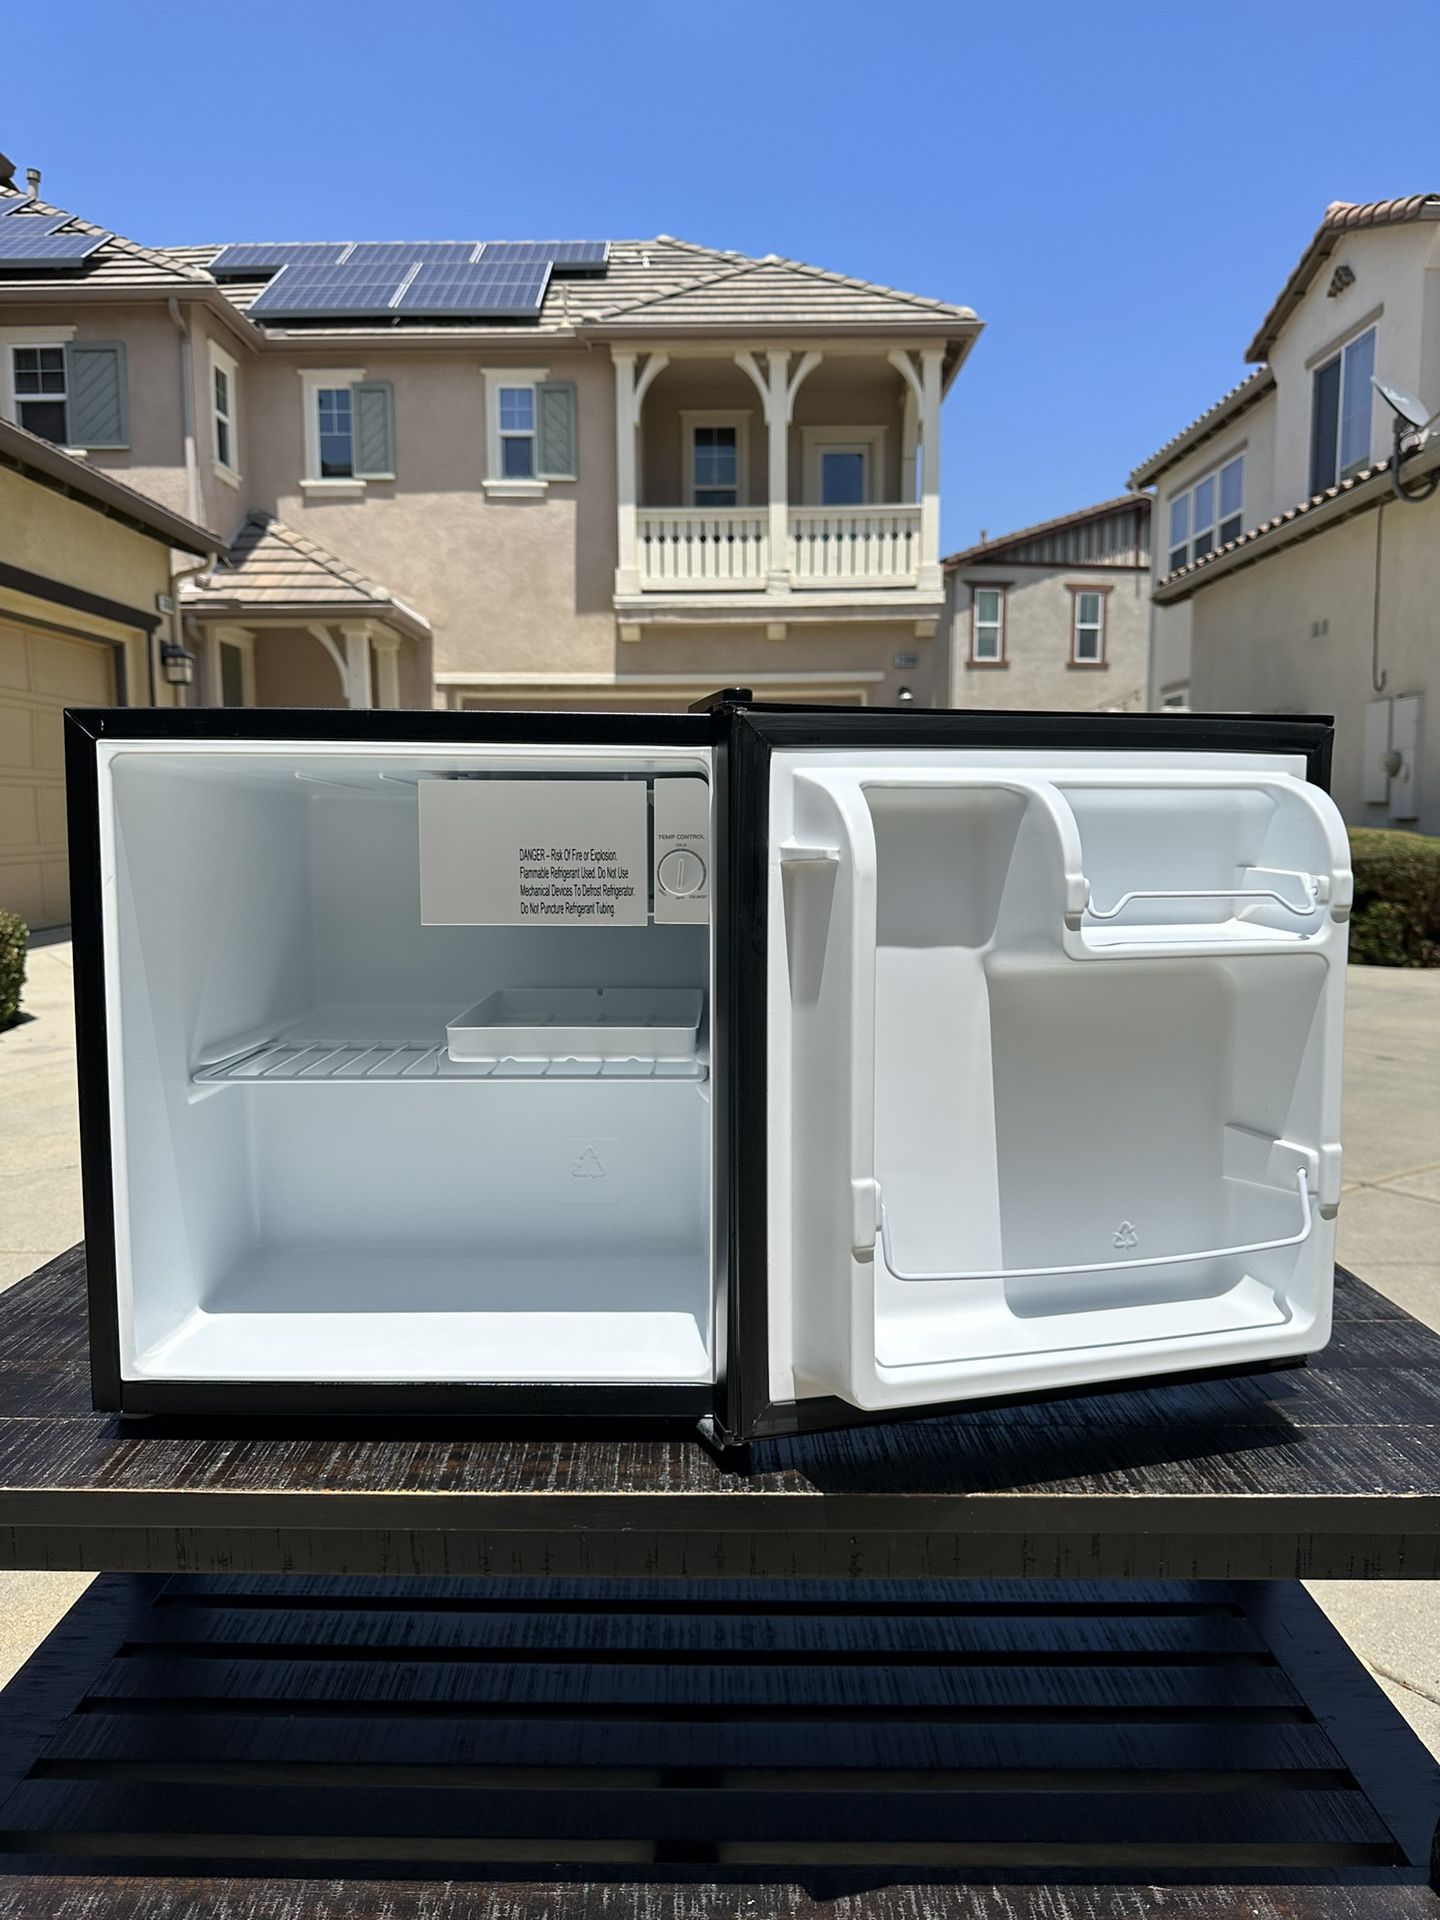 Galanz 1.7 Cu ft Compact Refrigerator, Black